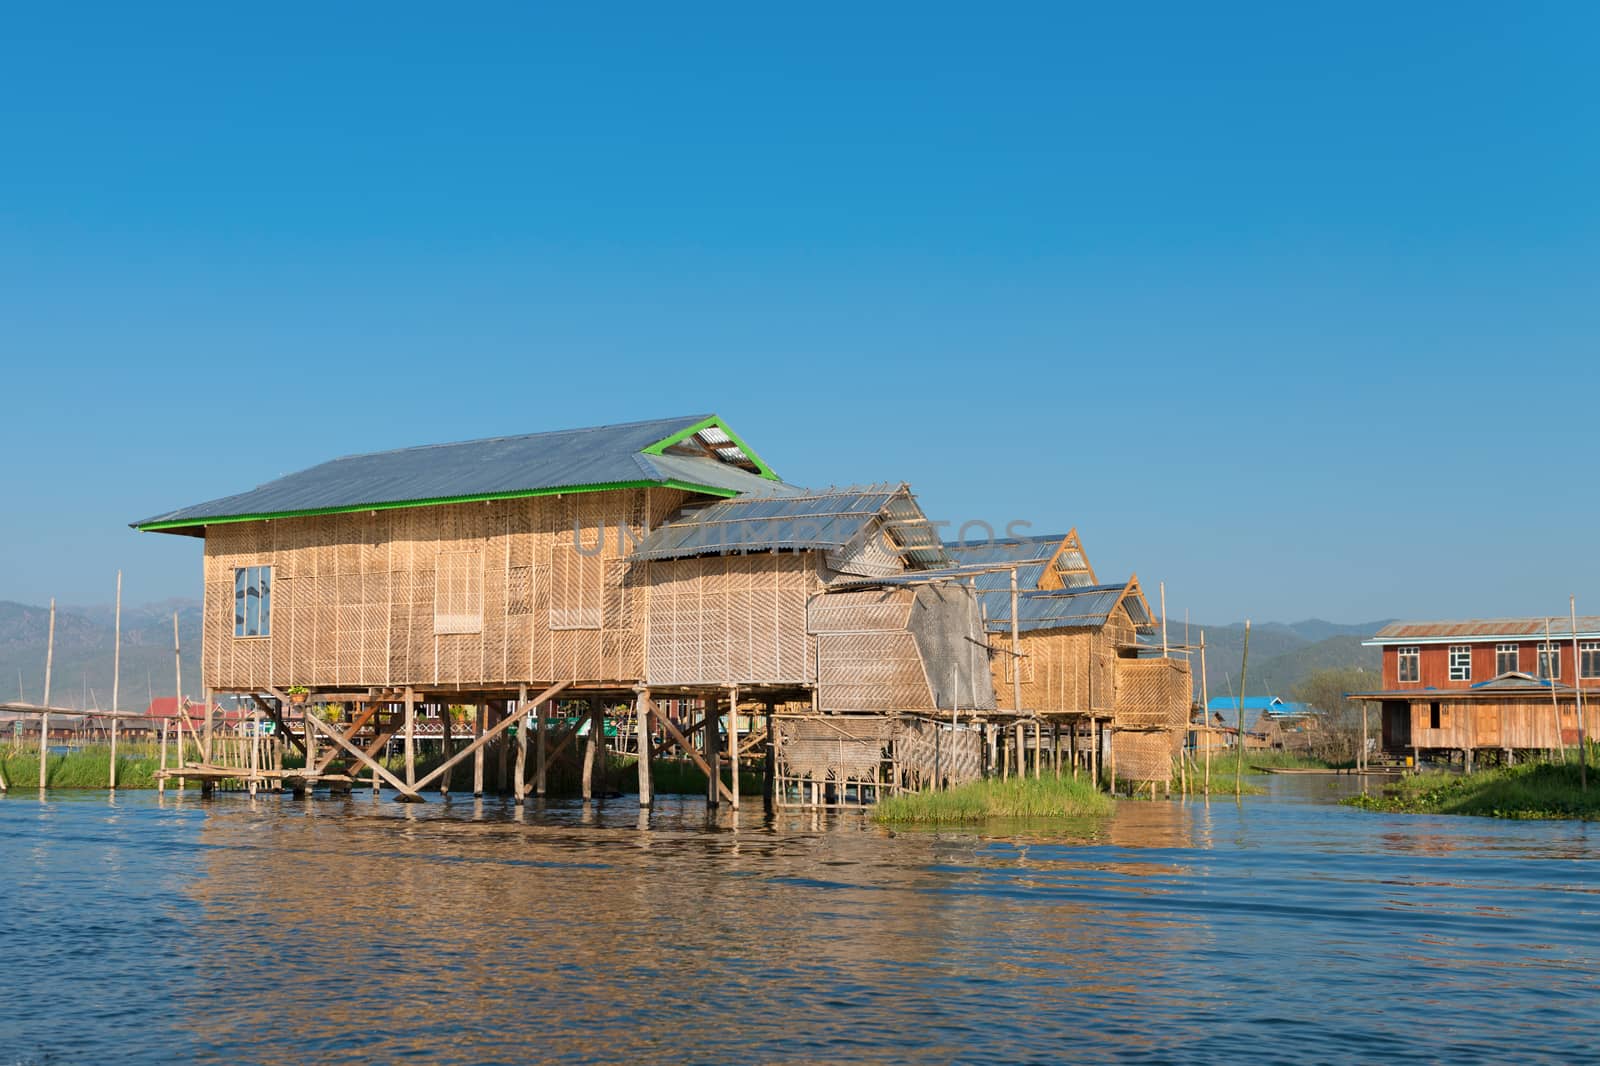 Traditional stilts house in water under blue sky by iryna_rasko